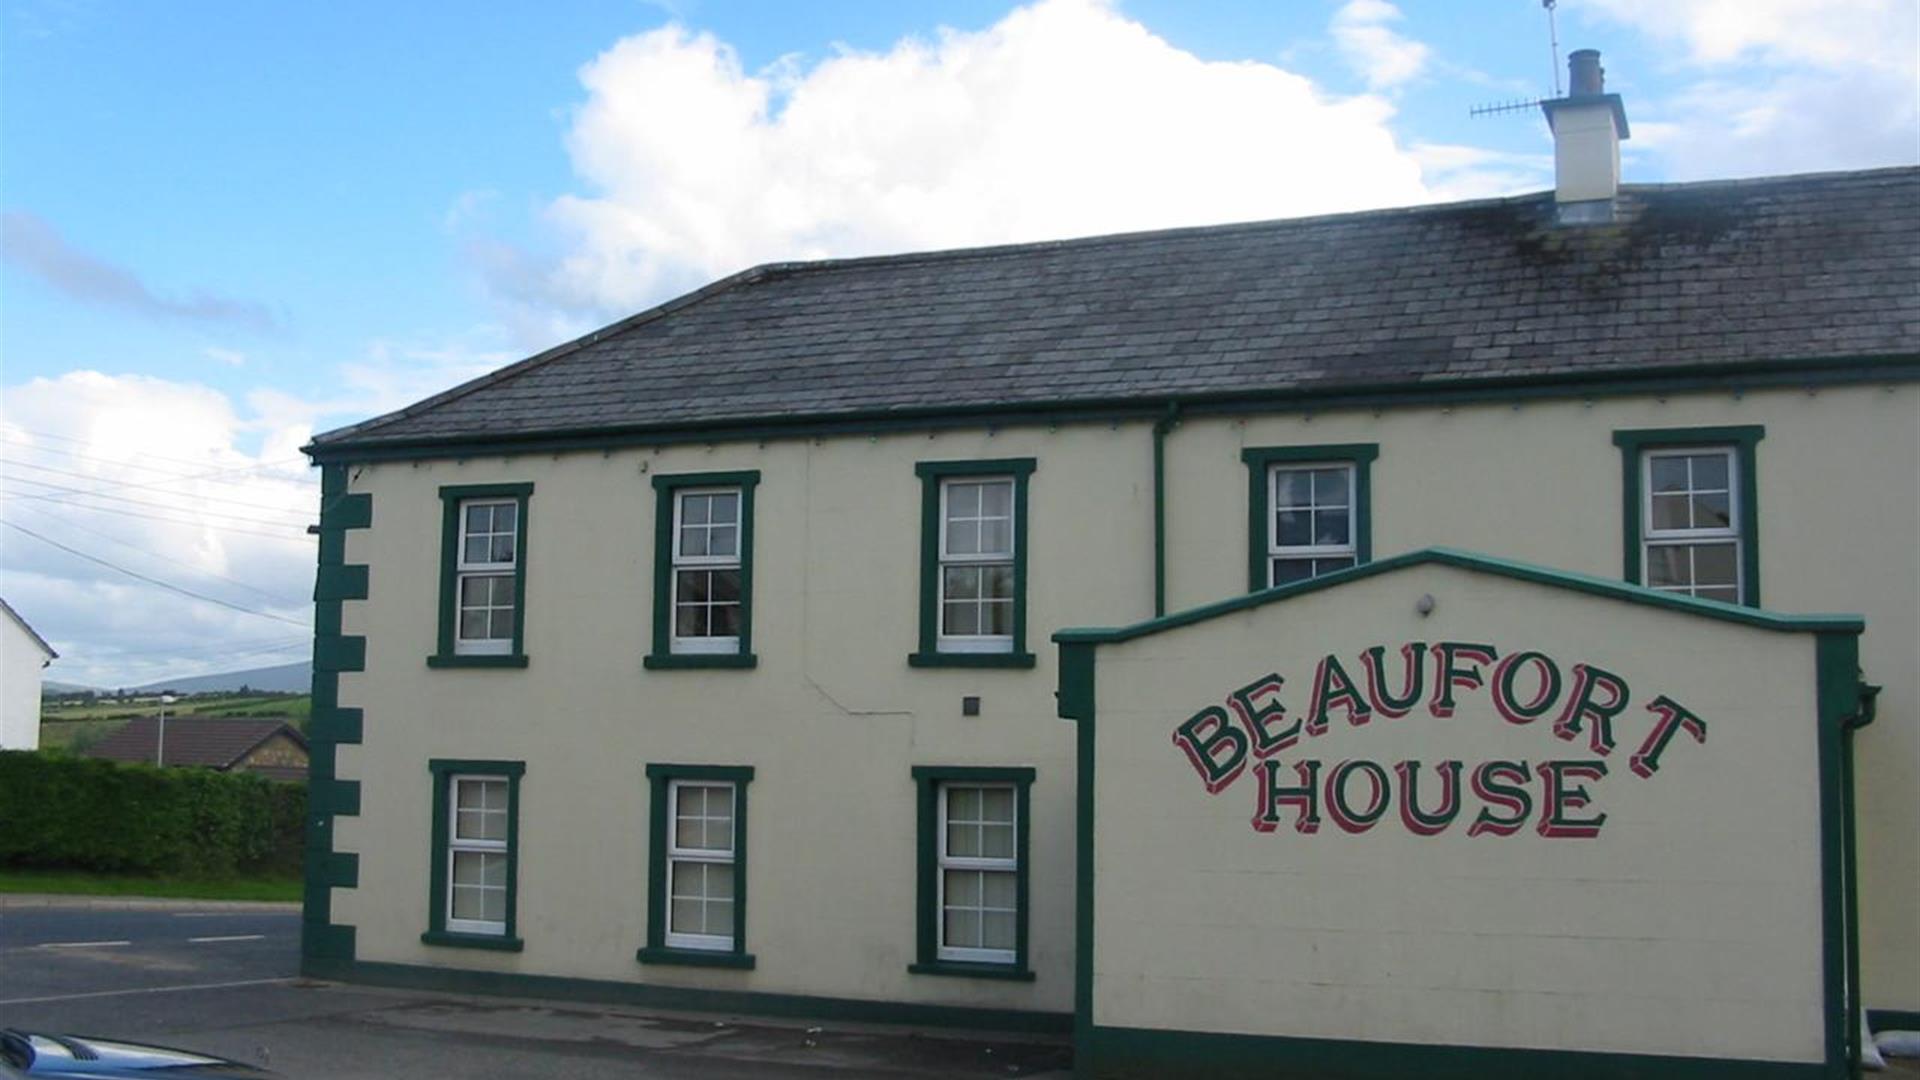 Beaufort House